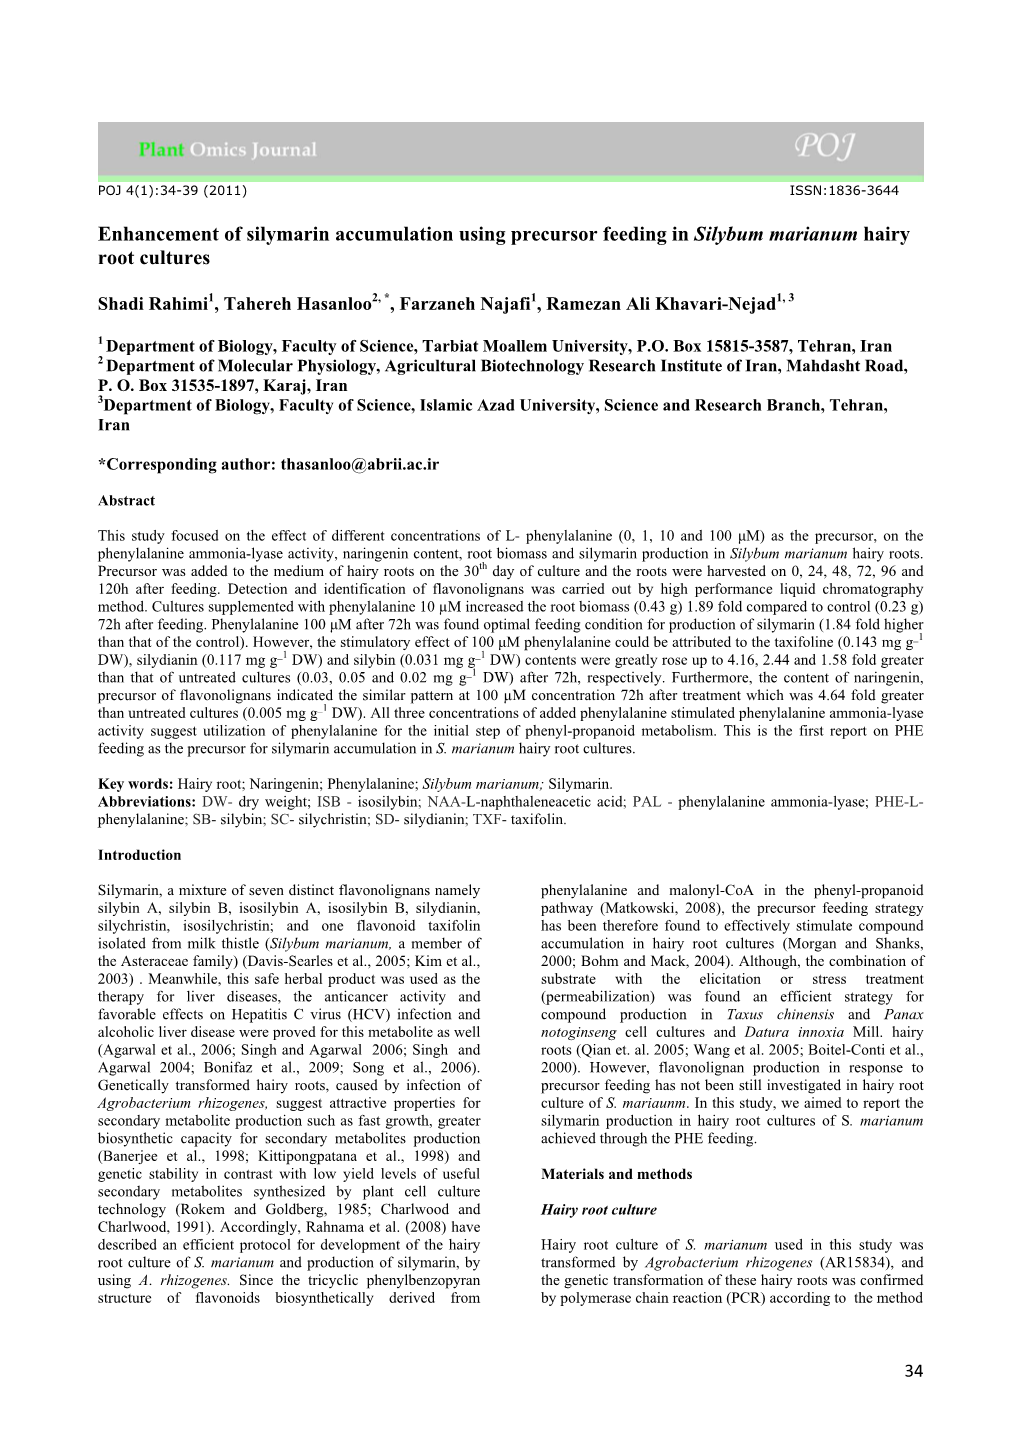 Enhancement of Silymarin Accumulation Using Precursor Feeding in Silybum Marianum Hairy Root Cultures